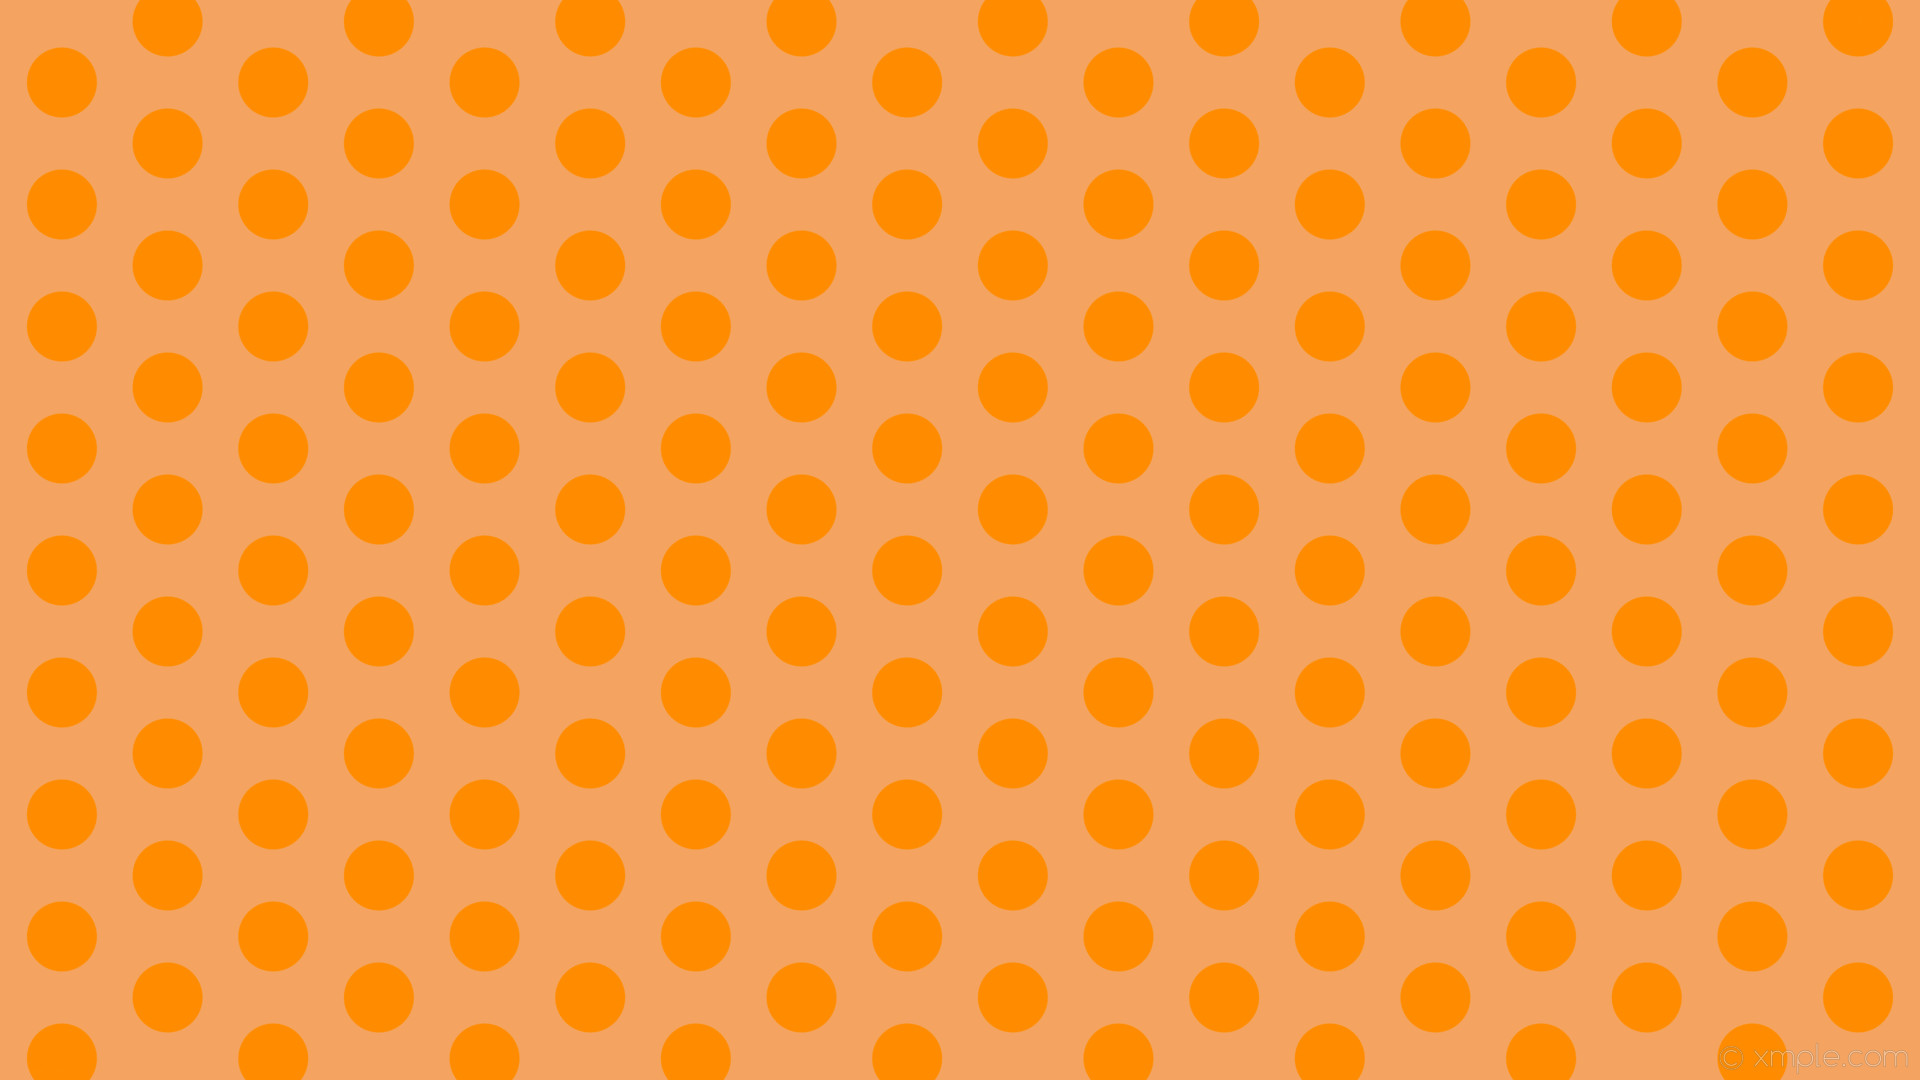 1920x1080 wallpaper polka dots hexagon orange brown sandy brown dark orange #f4a460  #ff8c00 diagonal 30